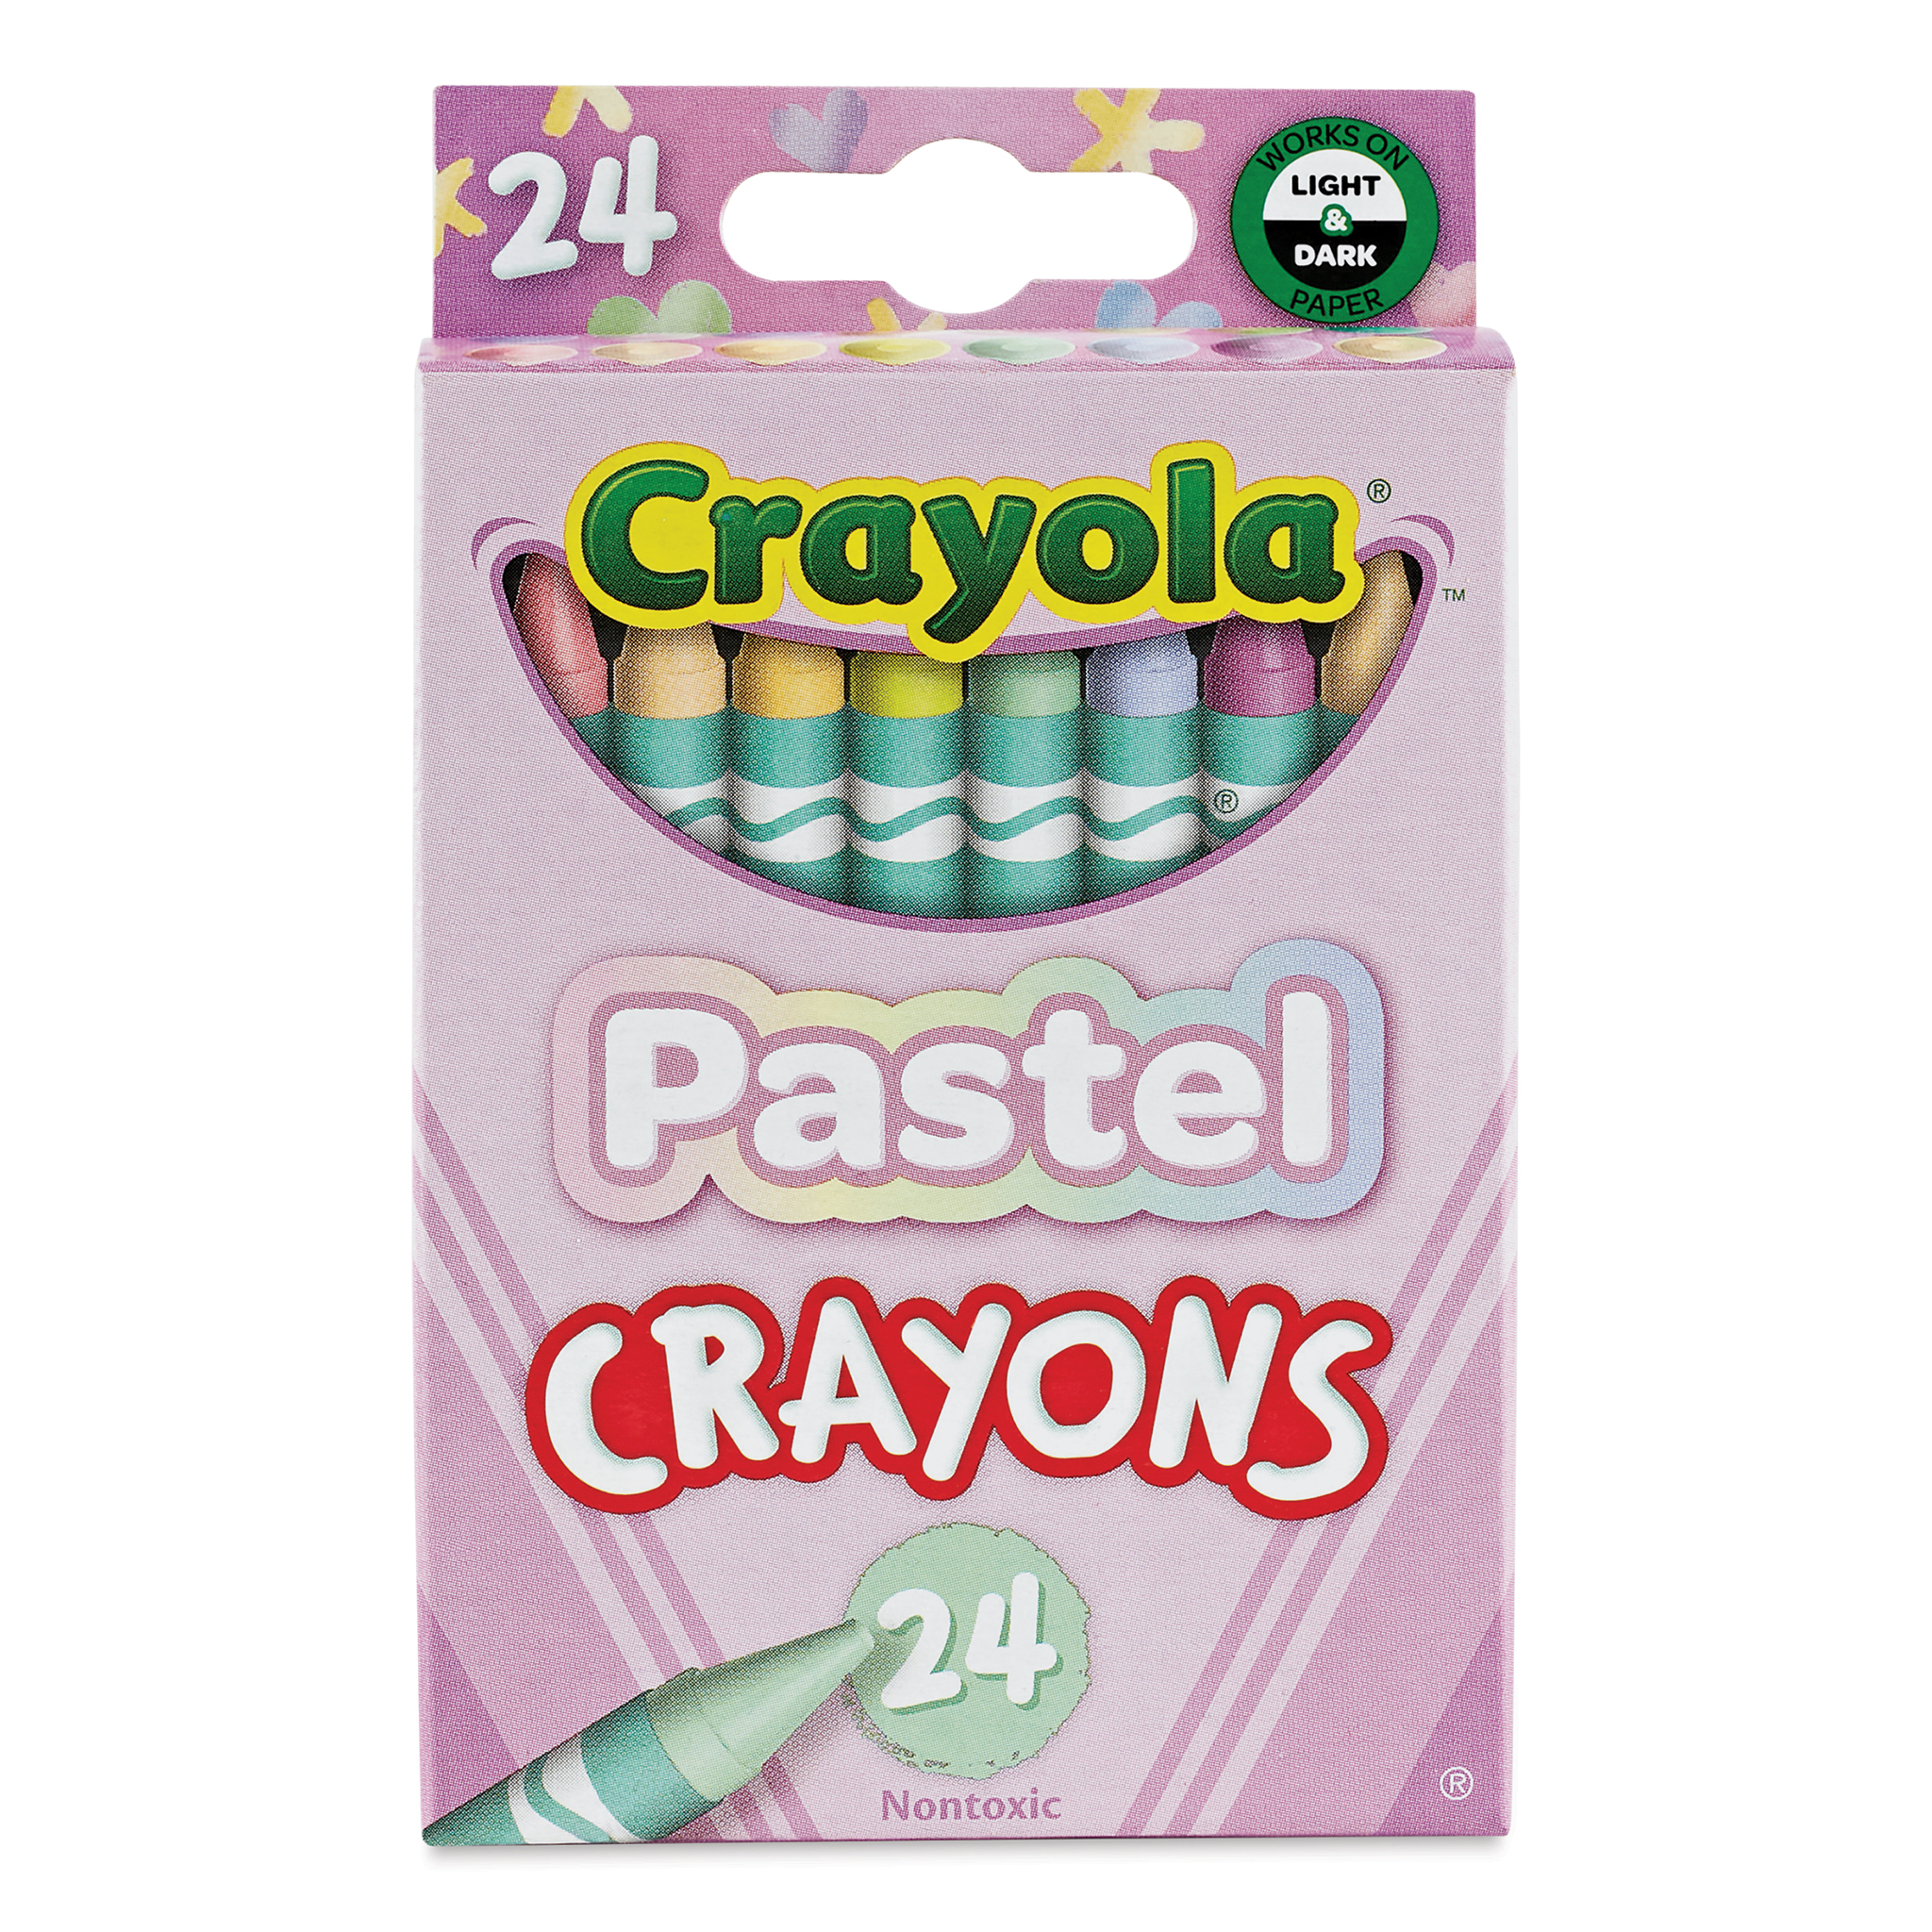 Crayola Pastel Crayons - 24 Pack